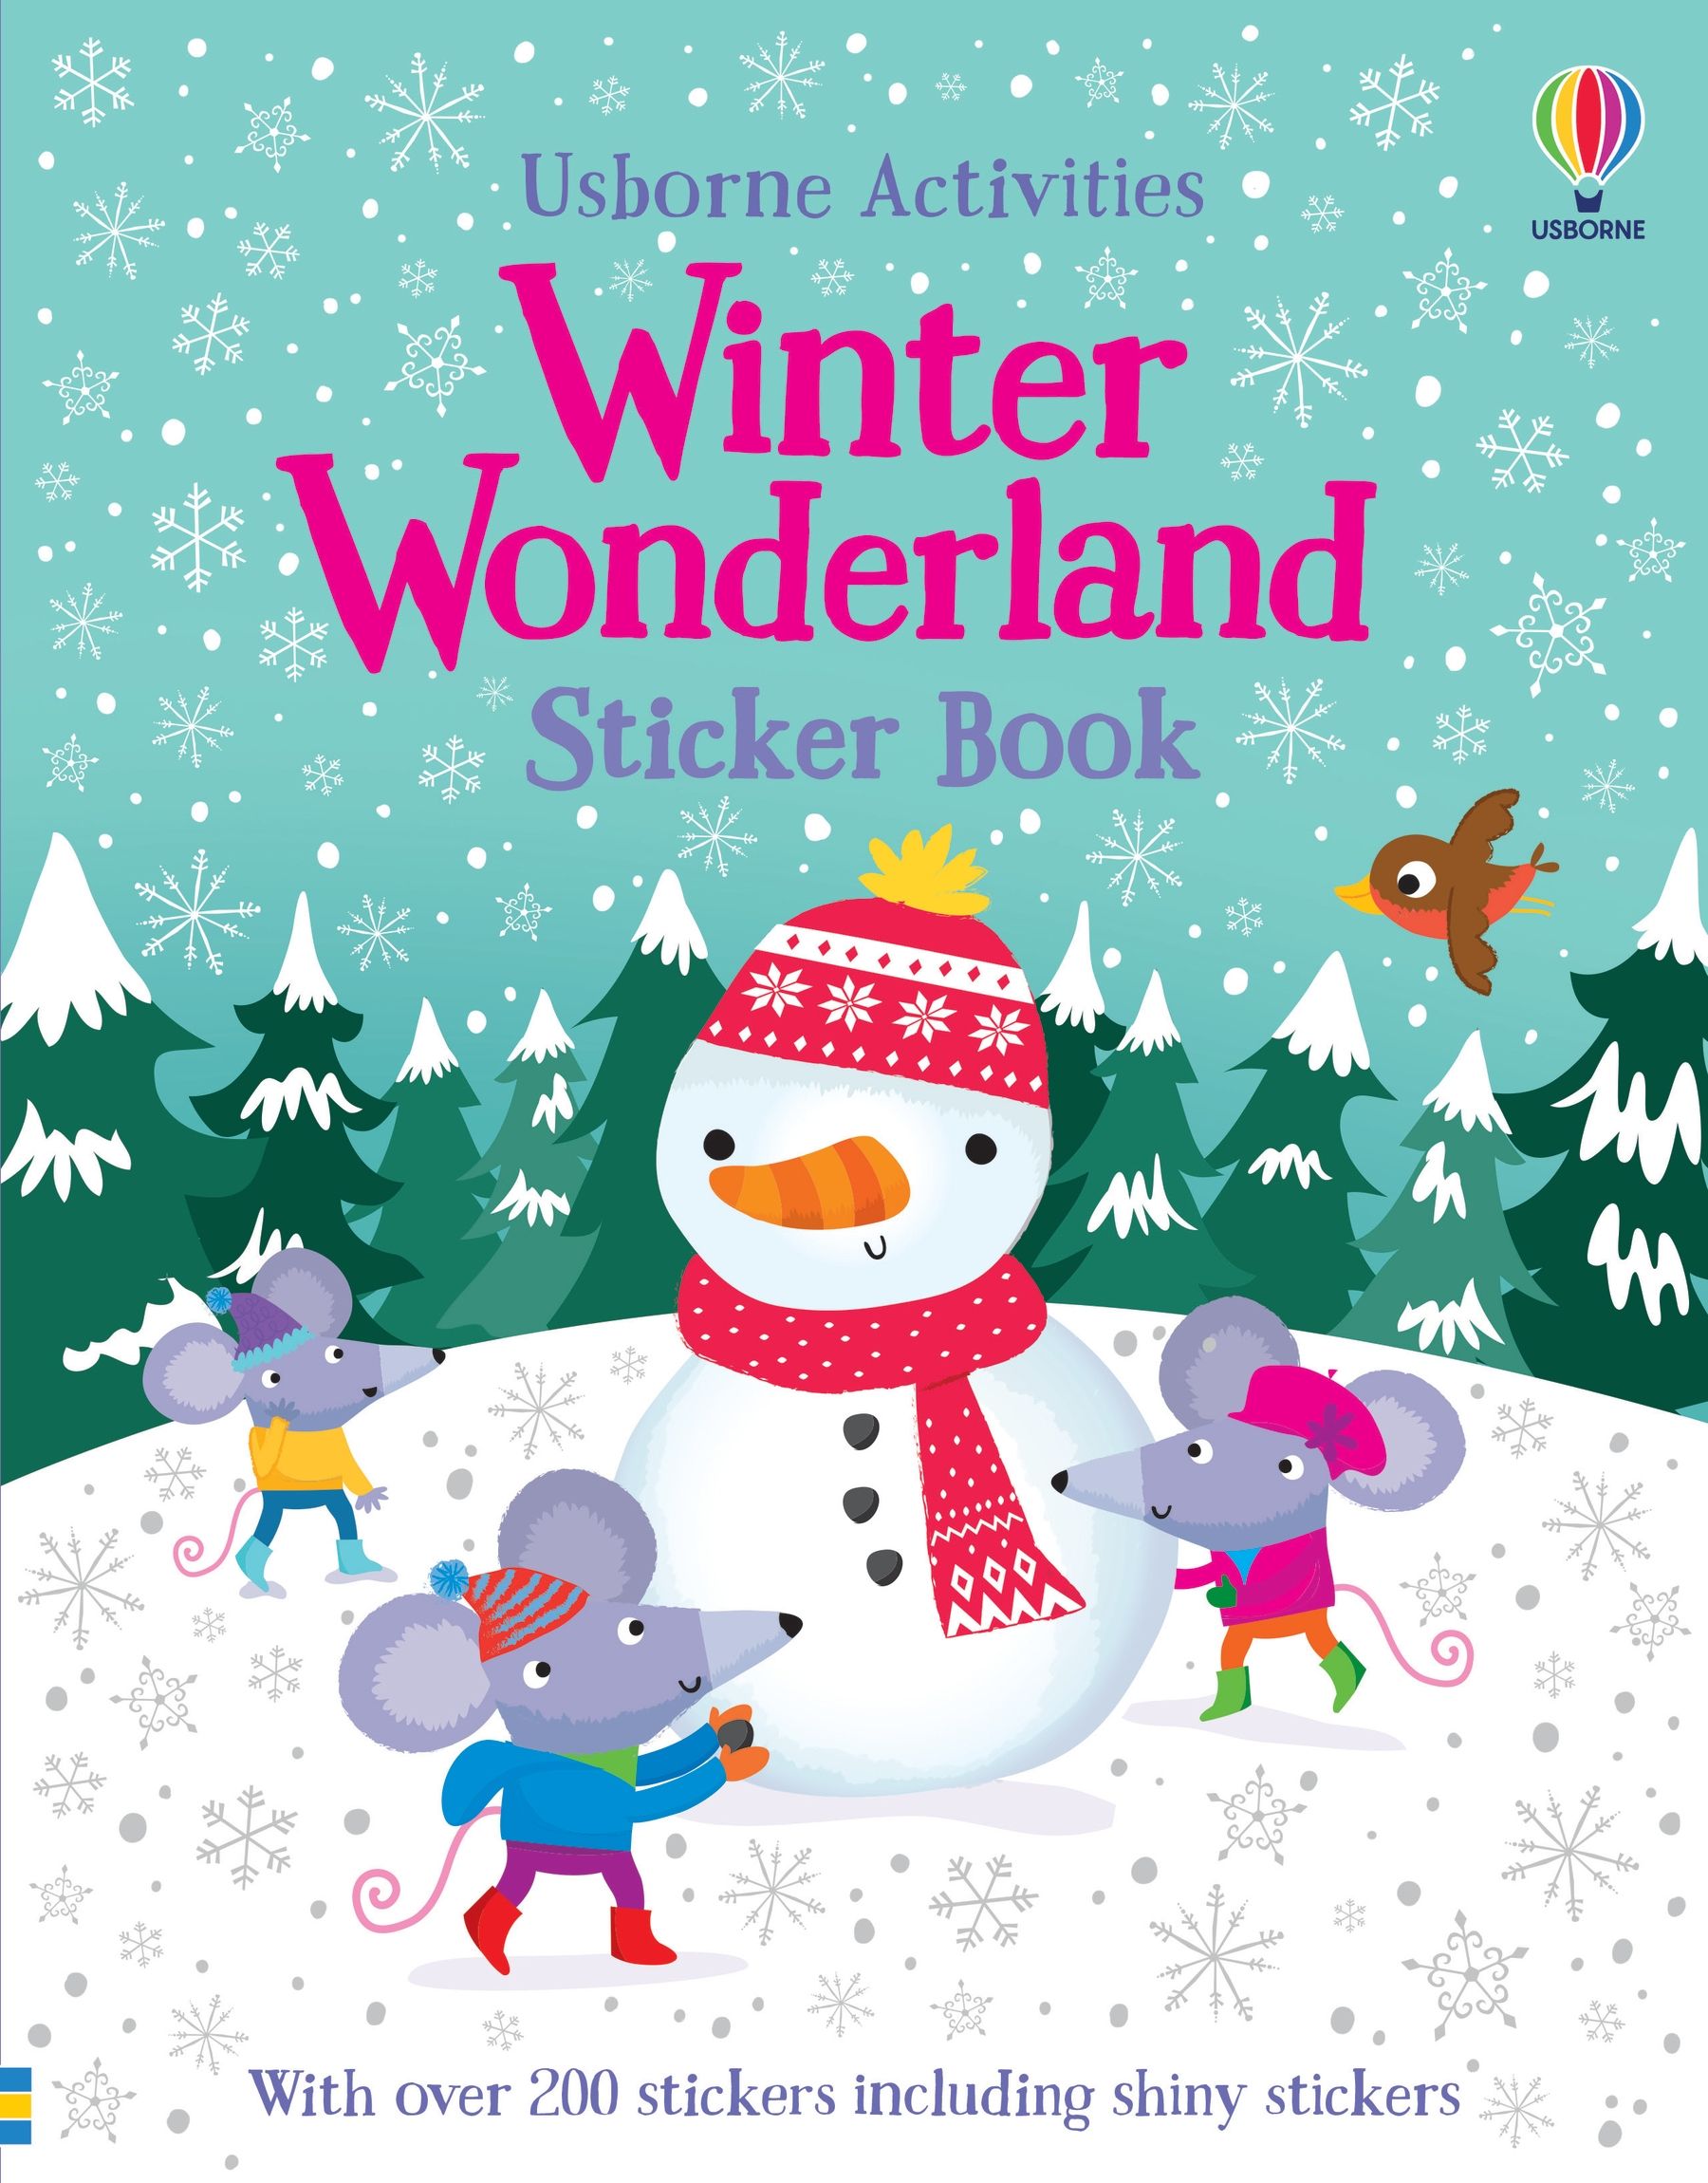 Little Bookworms | Usborne Winter Wonderland Sticker Book by Weirs of Baggot Street